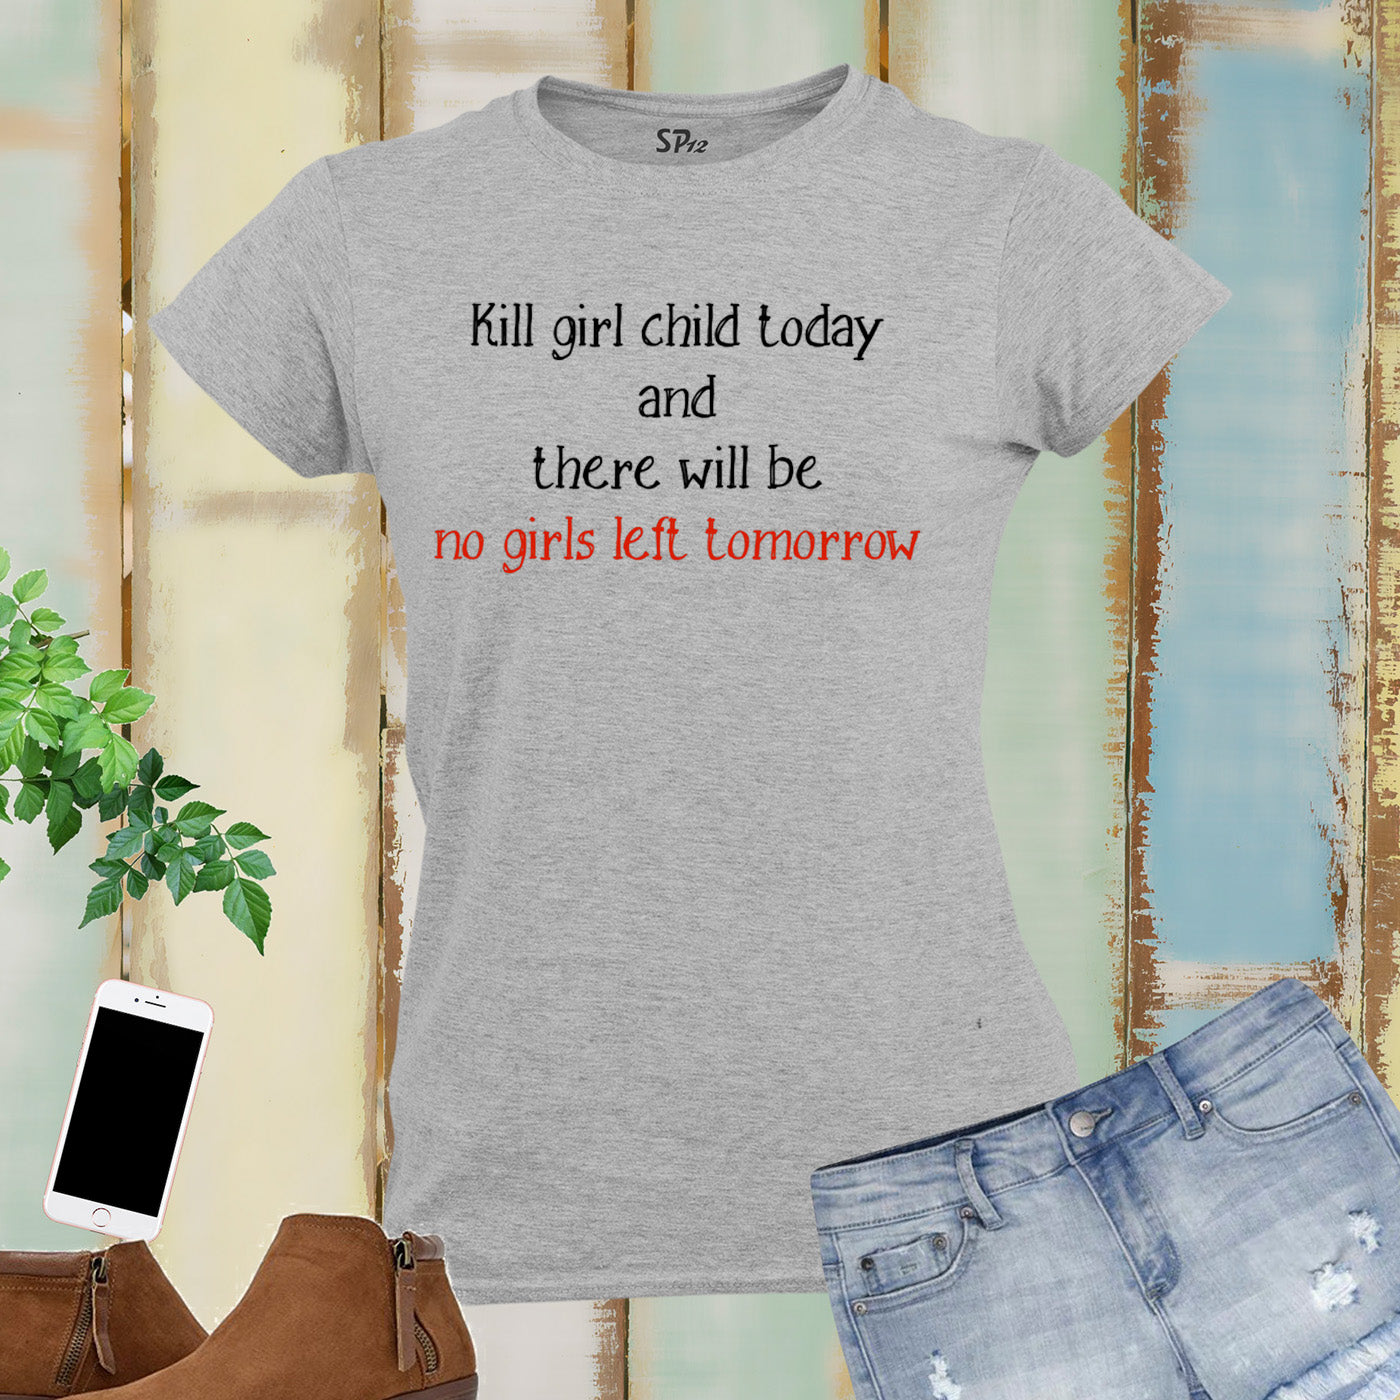 Female Infanticide Awareness Women T Shirt